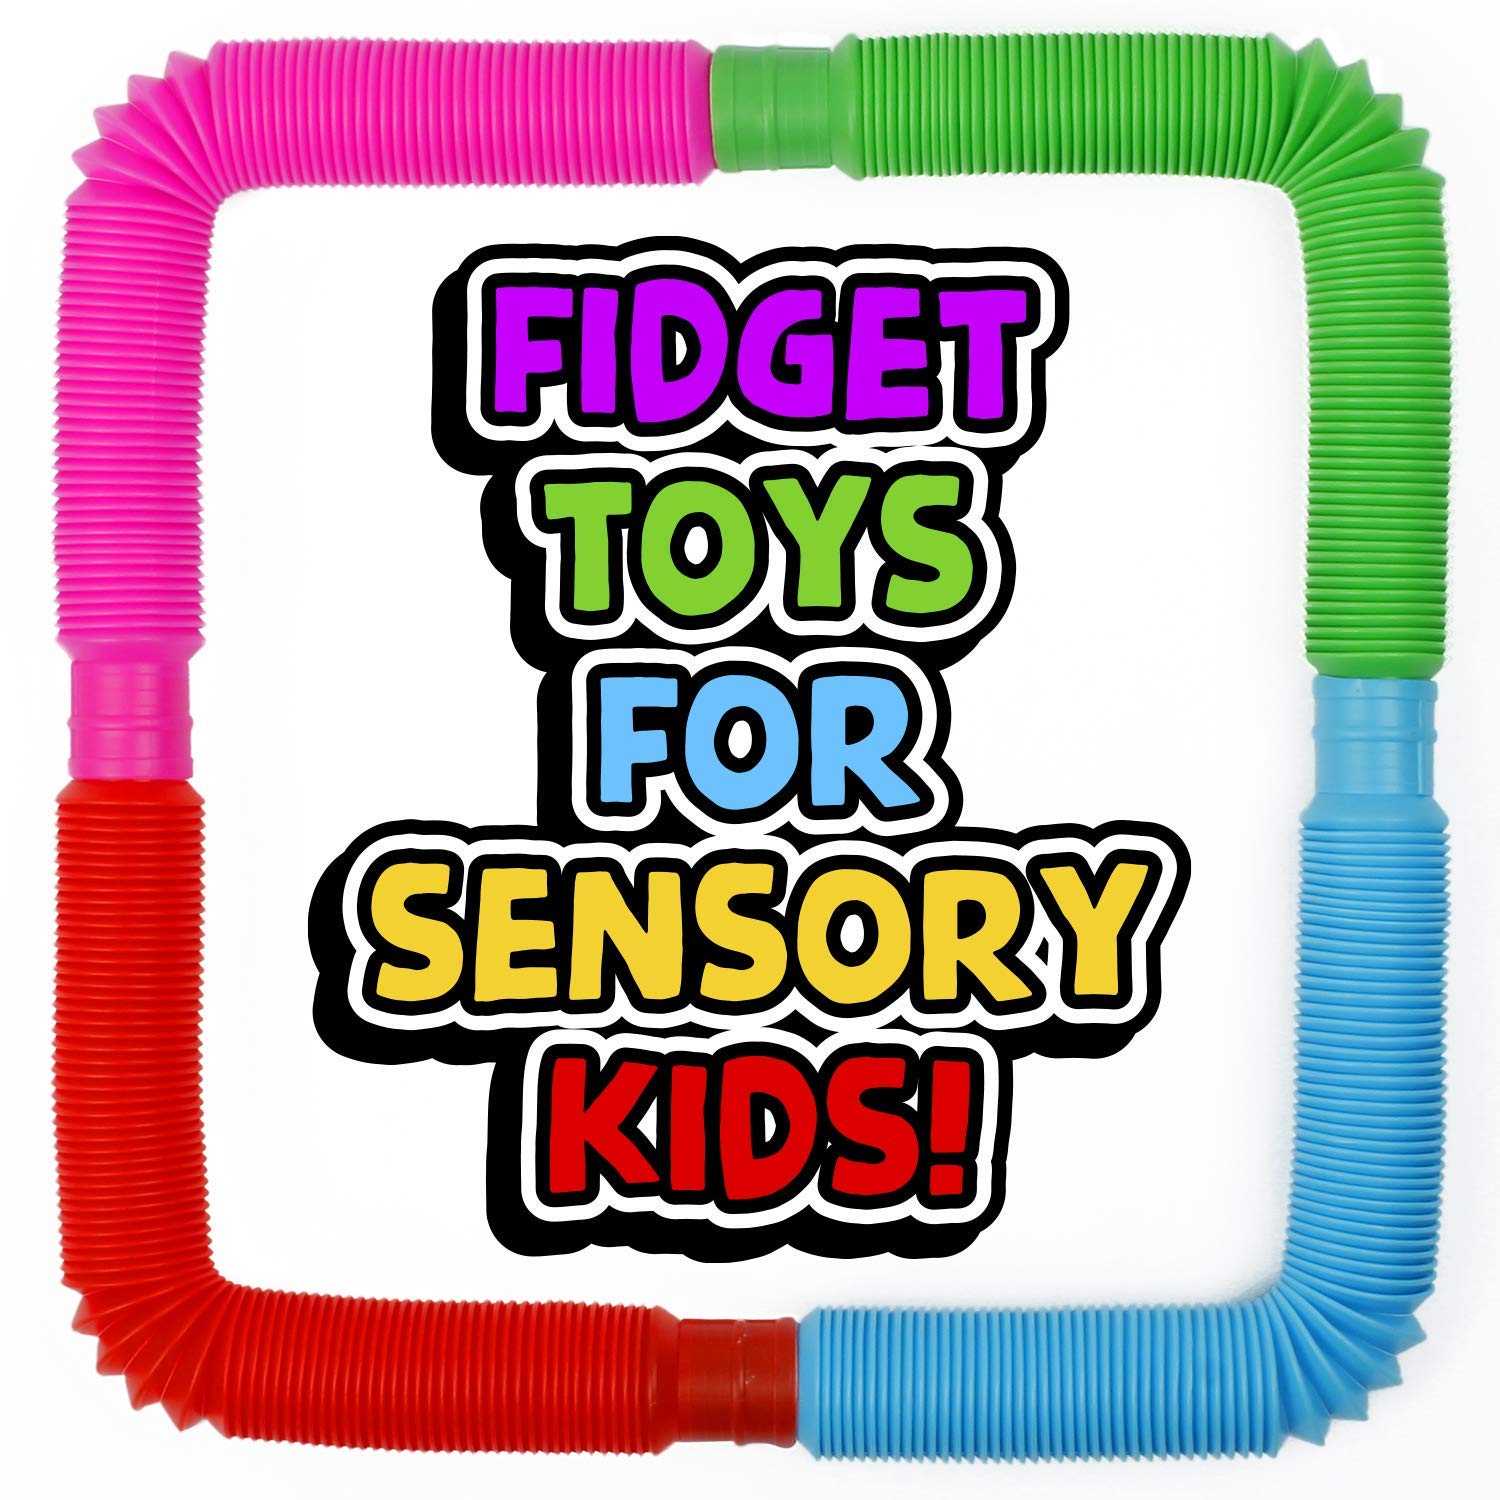 BunMo Pop Tubes Sensory Toys, Fine Motor Skills Toddler Toys, Fidget Toys for Sensory Kids and Learning Toys